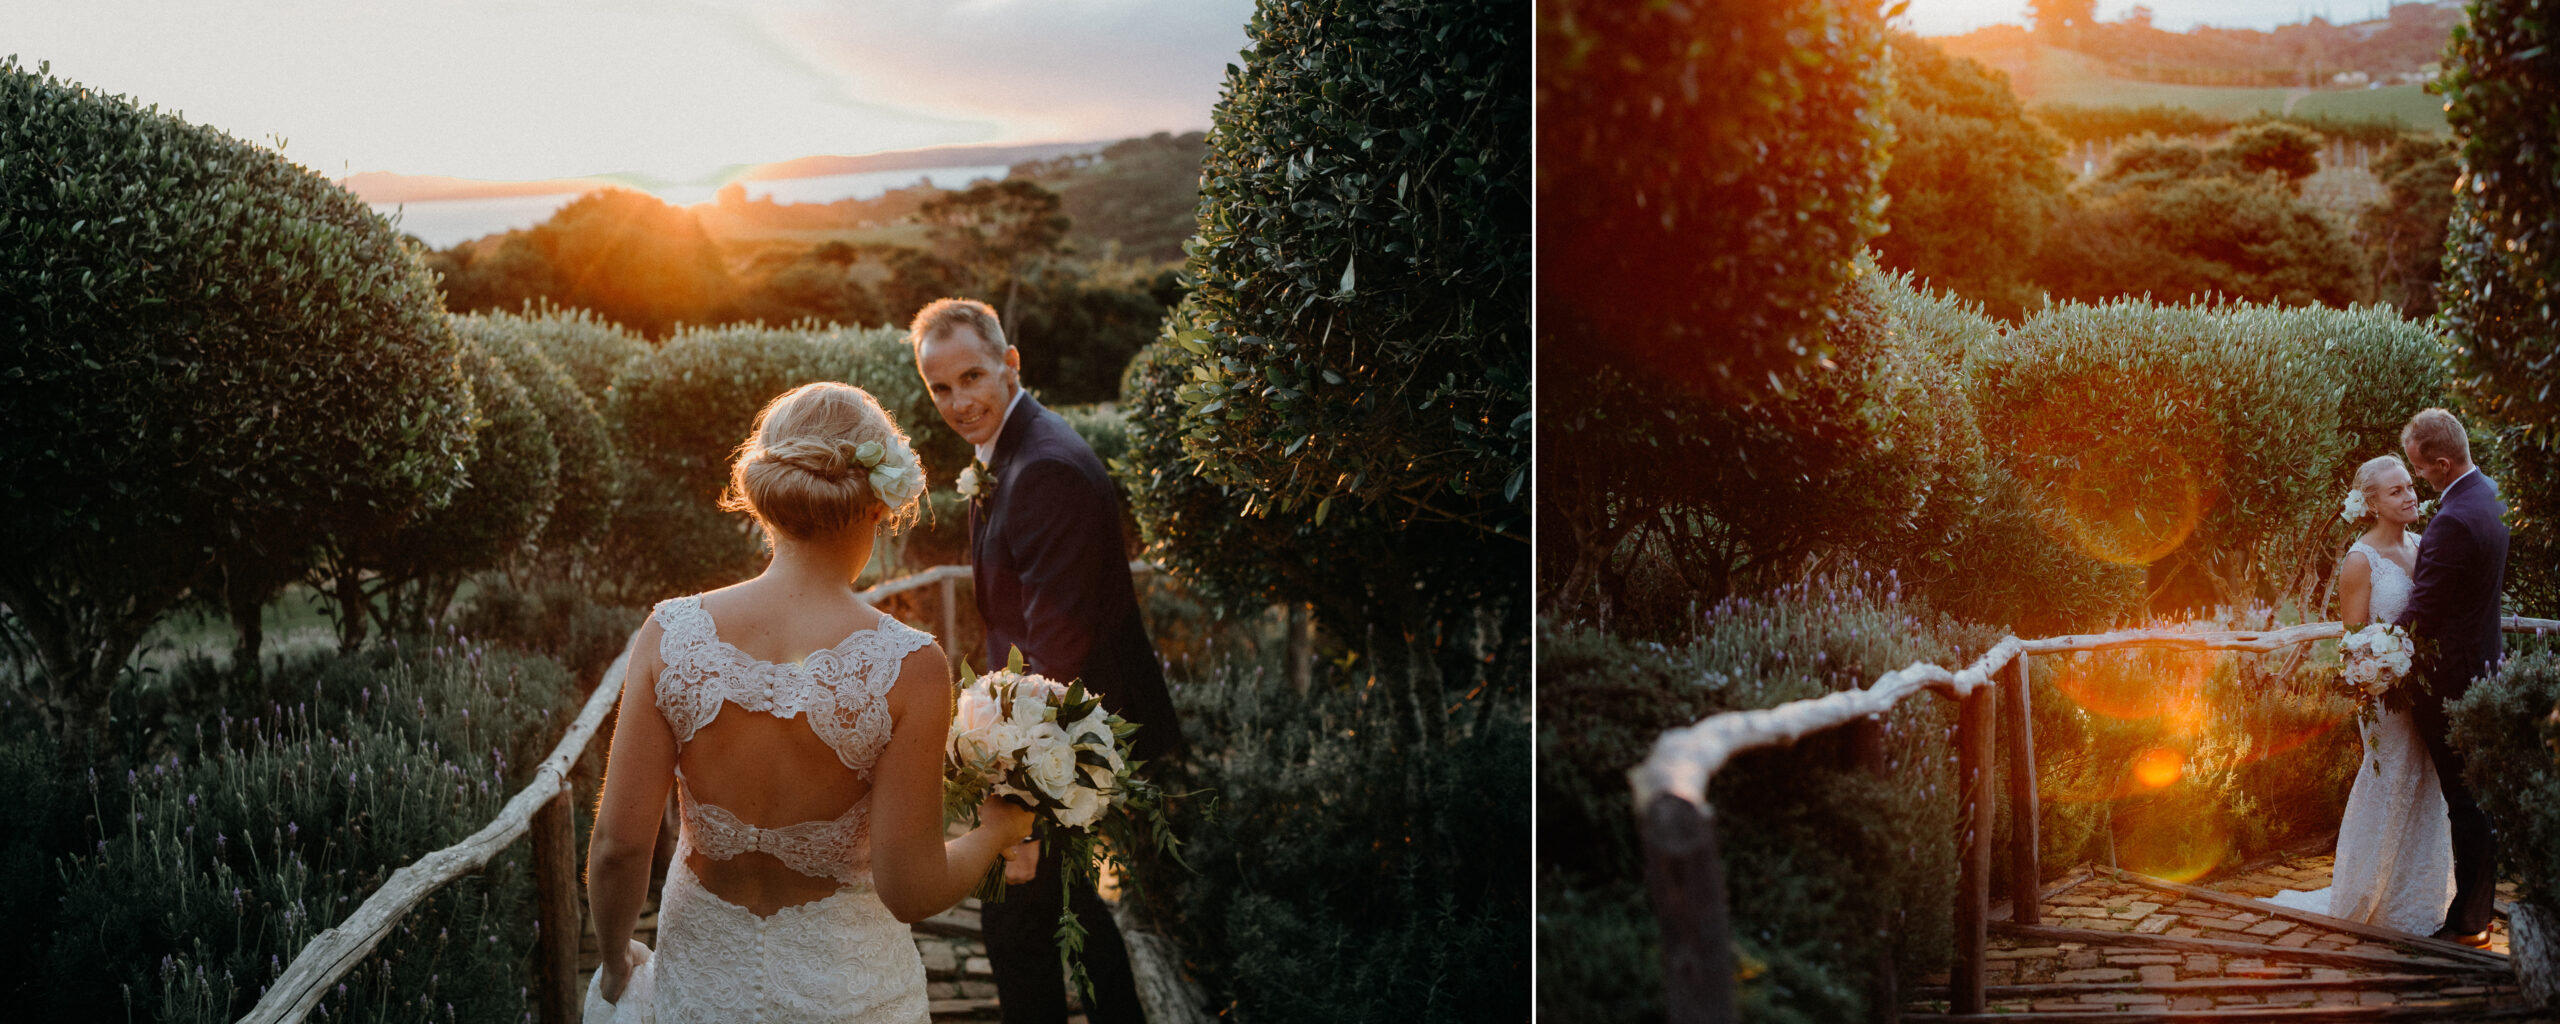 Bride and Groom wedding photos during sunset golden hour at Mudbrick Waiheke Island Auckland, by Sarah Weber Photography